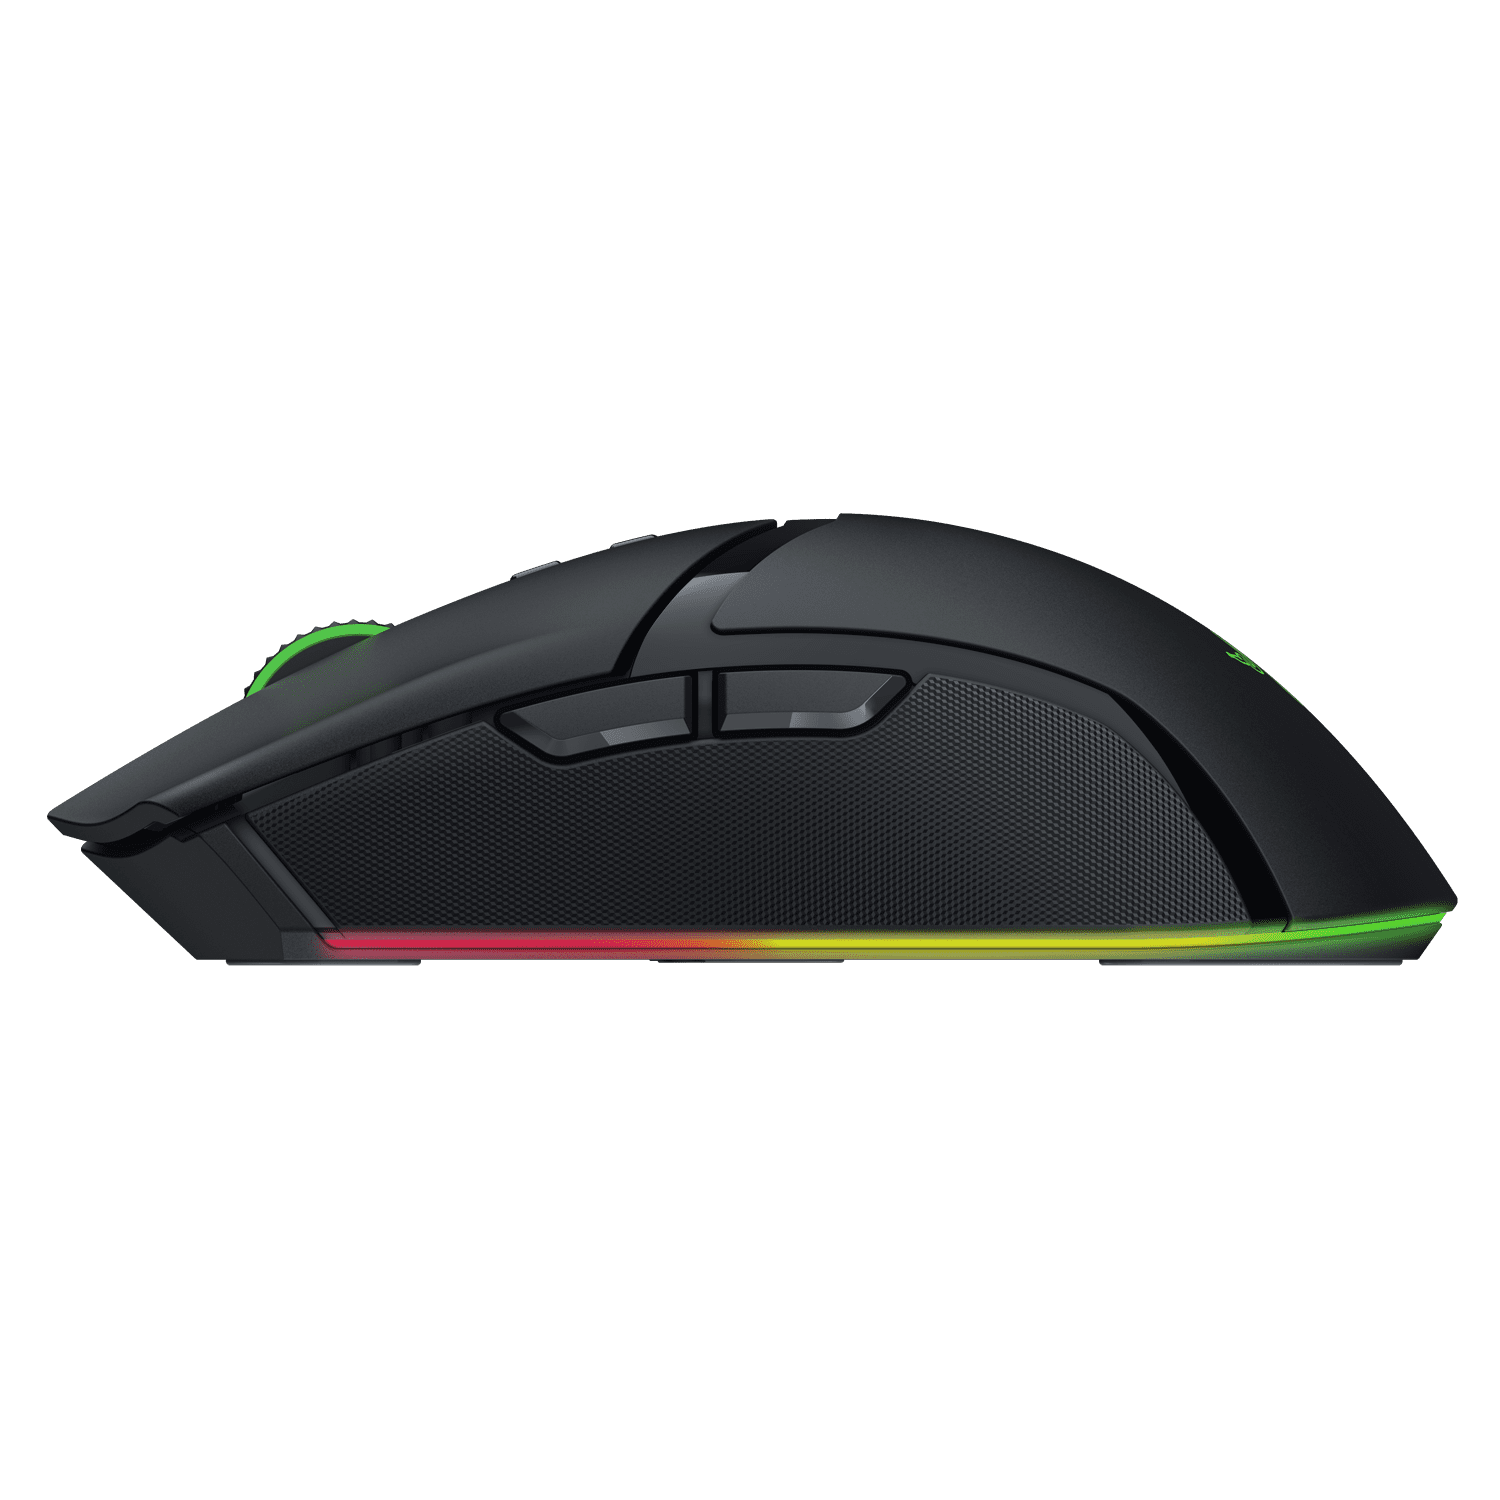 Razer Cobra Pro Lightweight Wireless PC Gaming Mouse with Razer